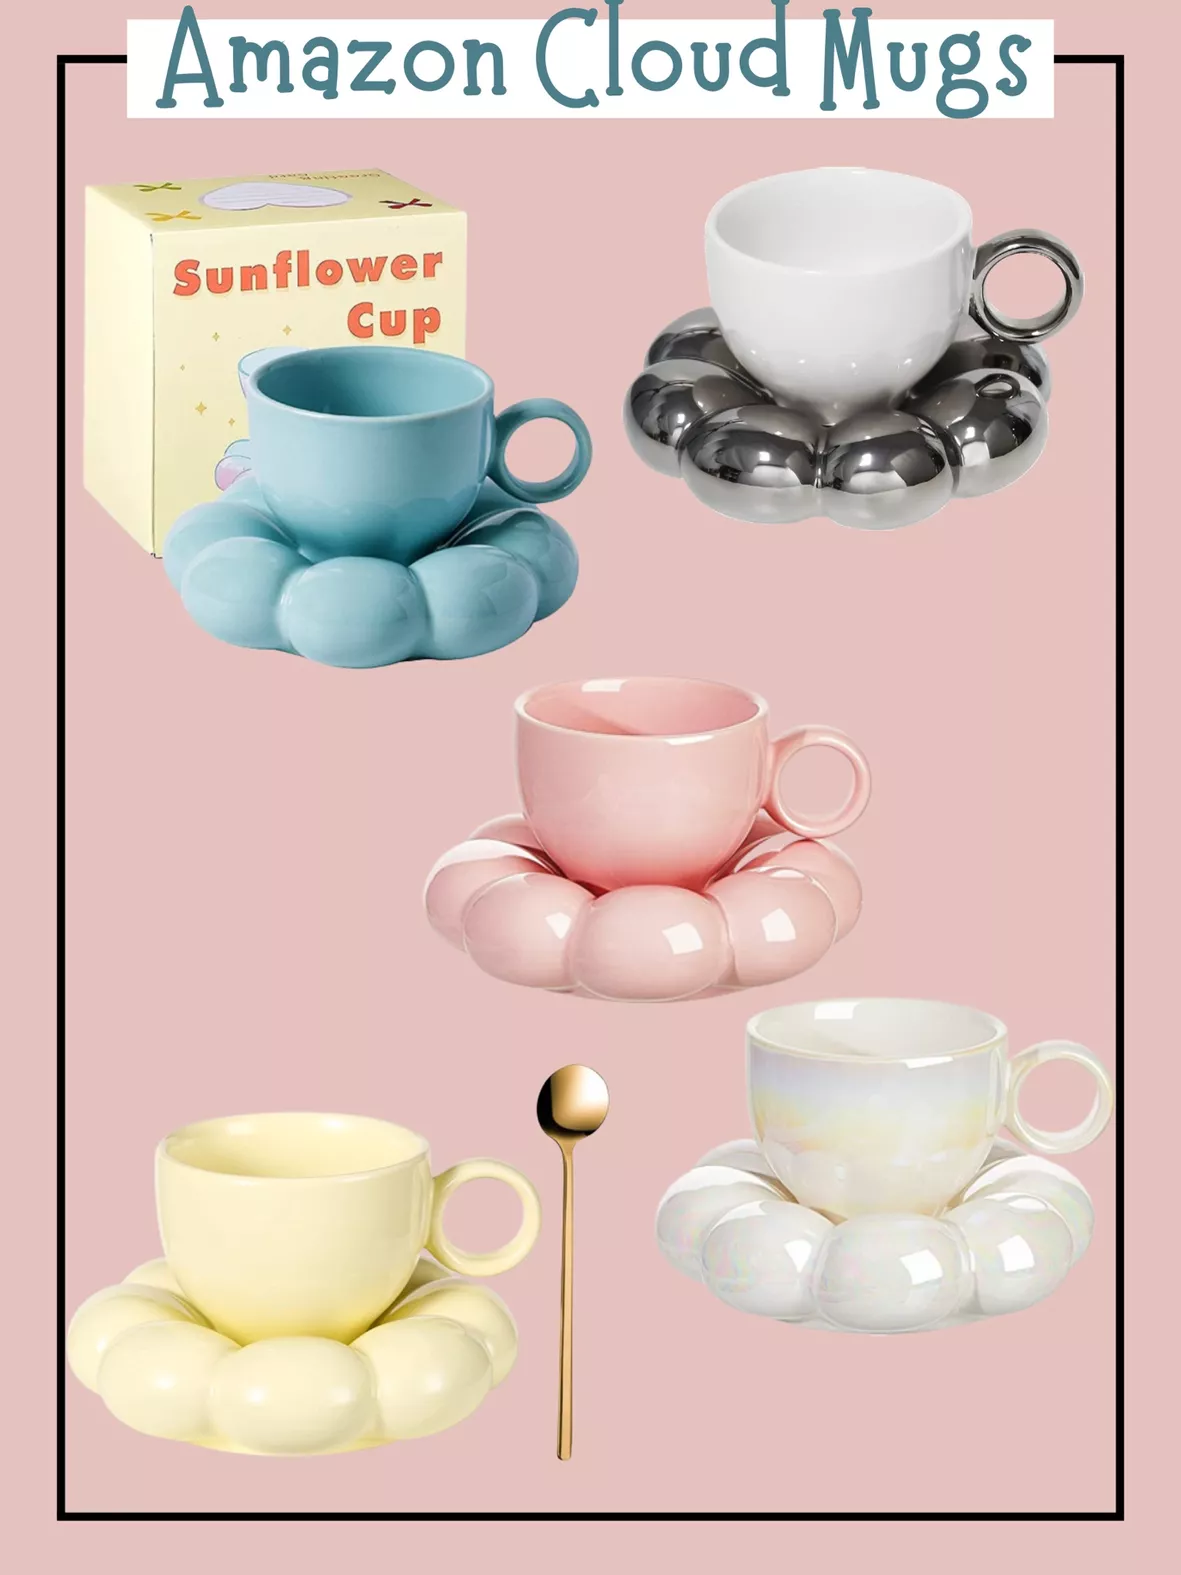 Sunflower Ceramic Mug and Plate Set / Chunky Tea & Coffee Cup